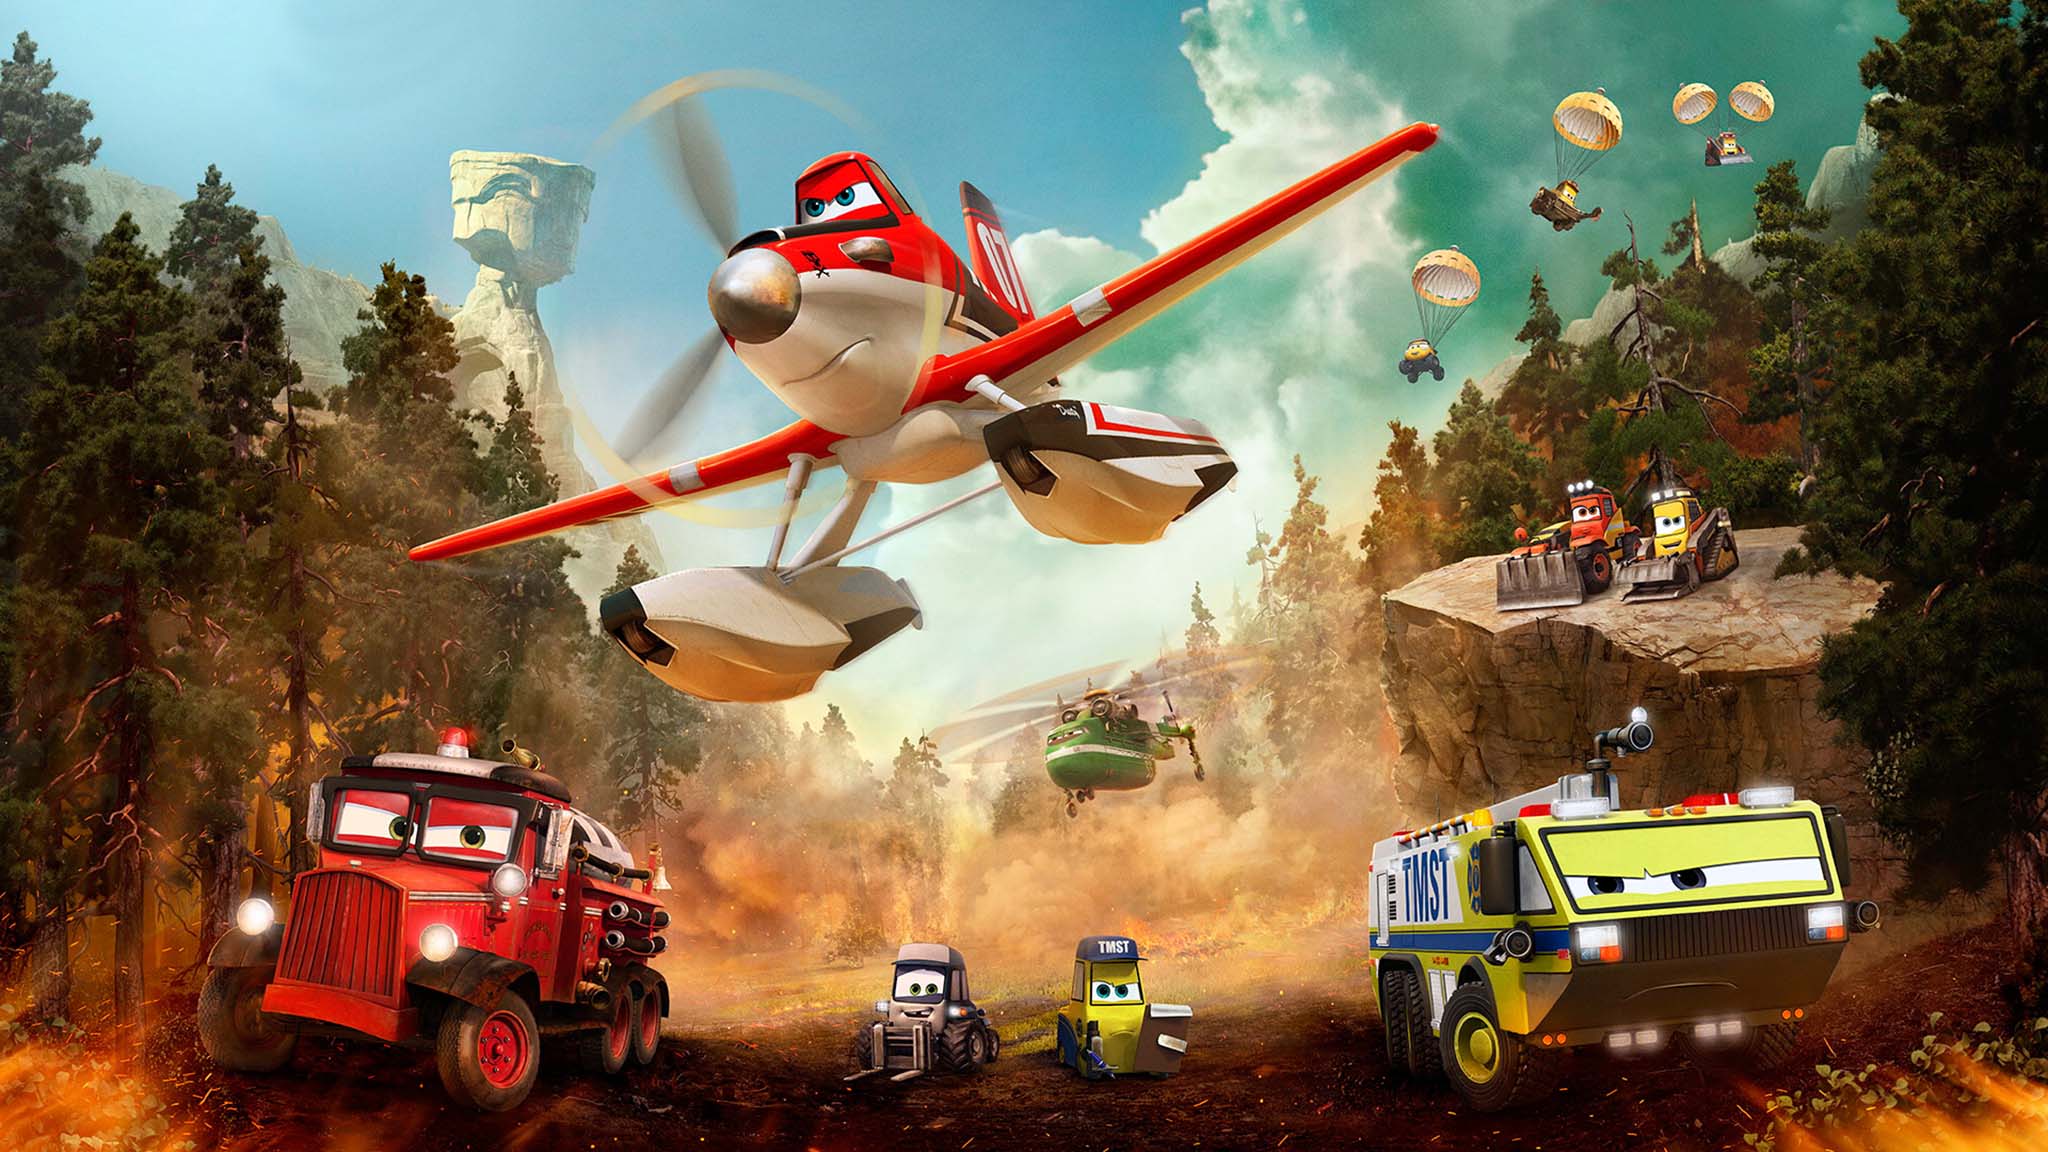 فيلم Planes: Fire & Rescue 2014 مدبلج